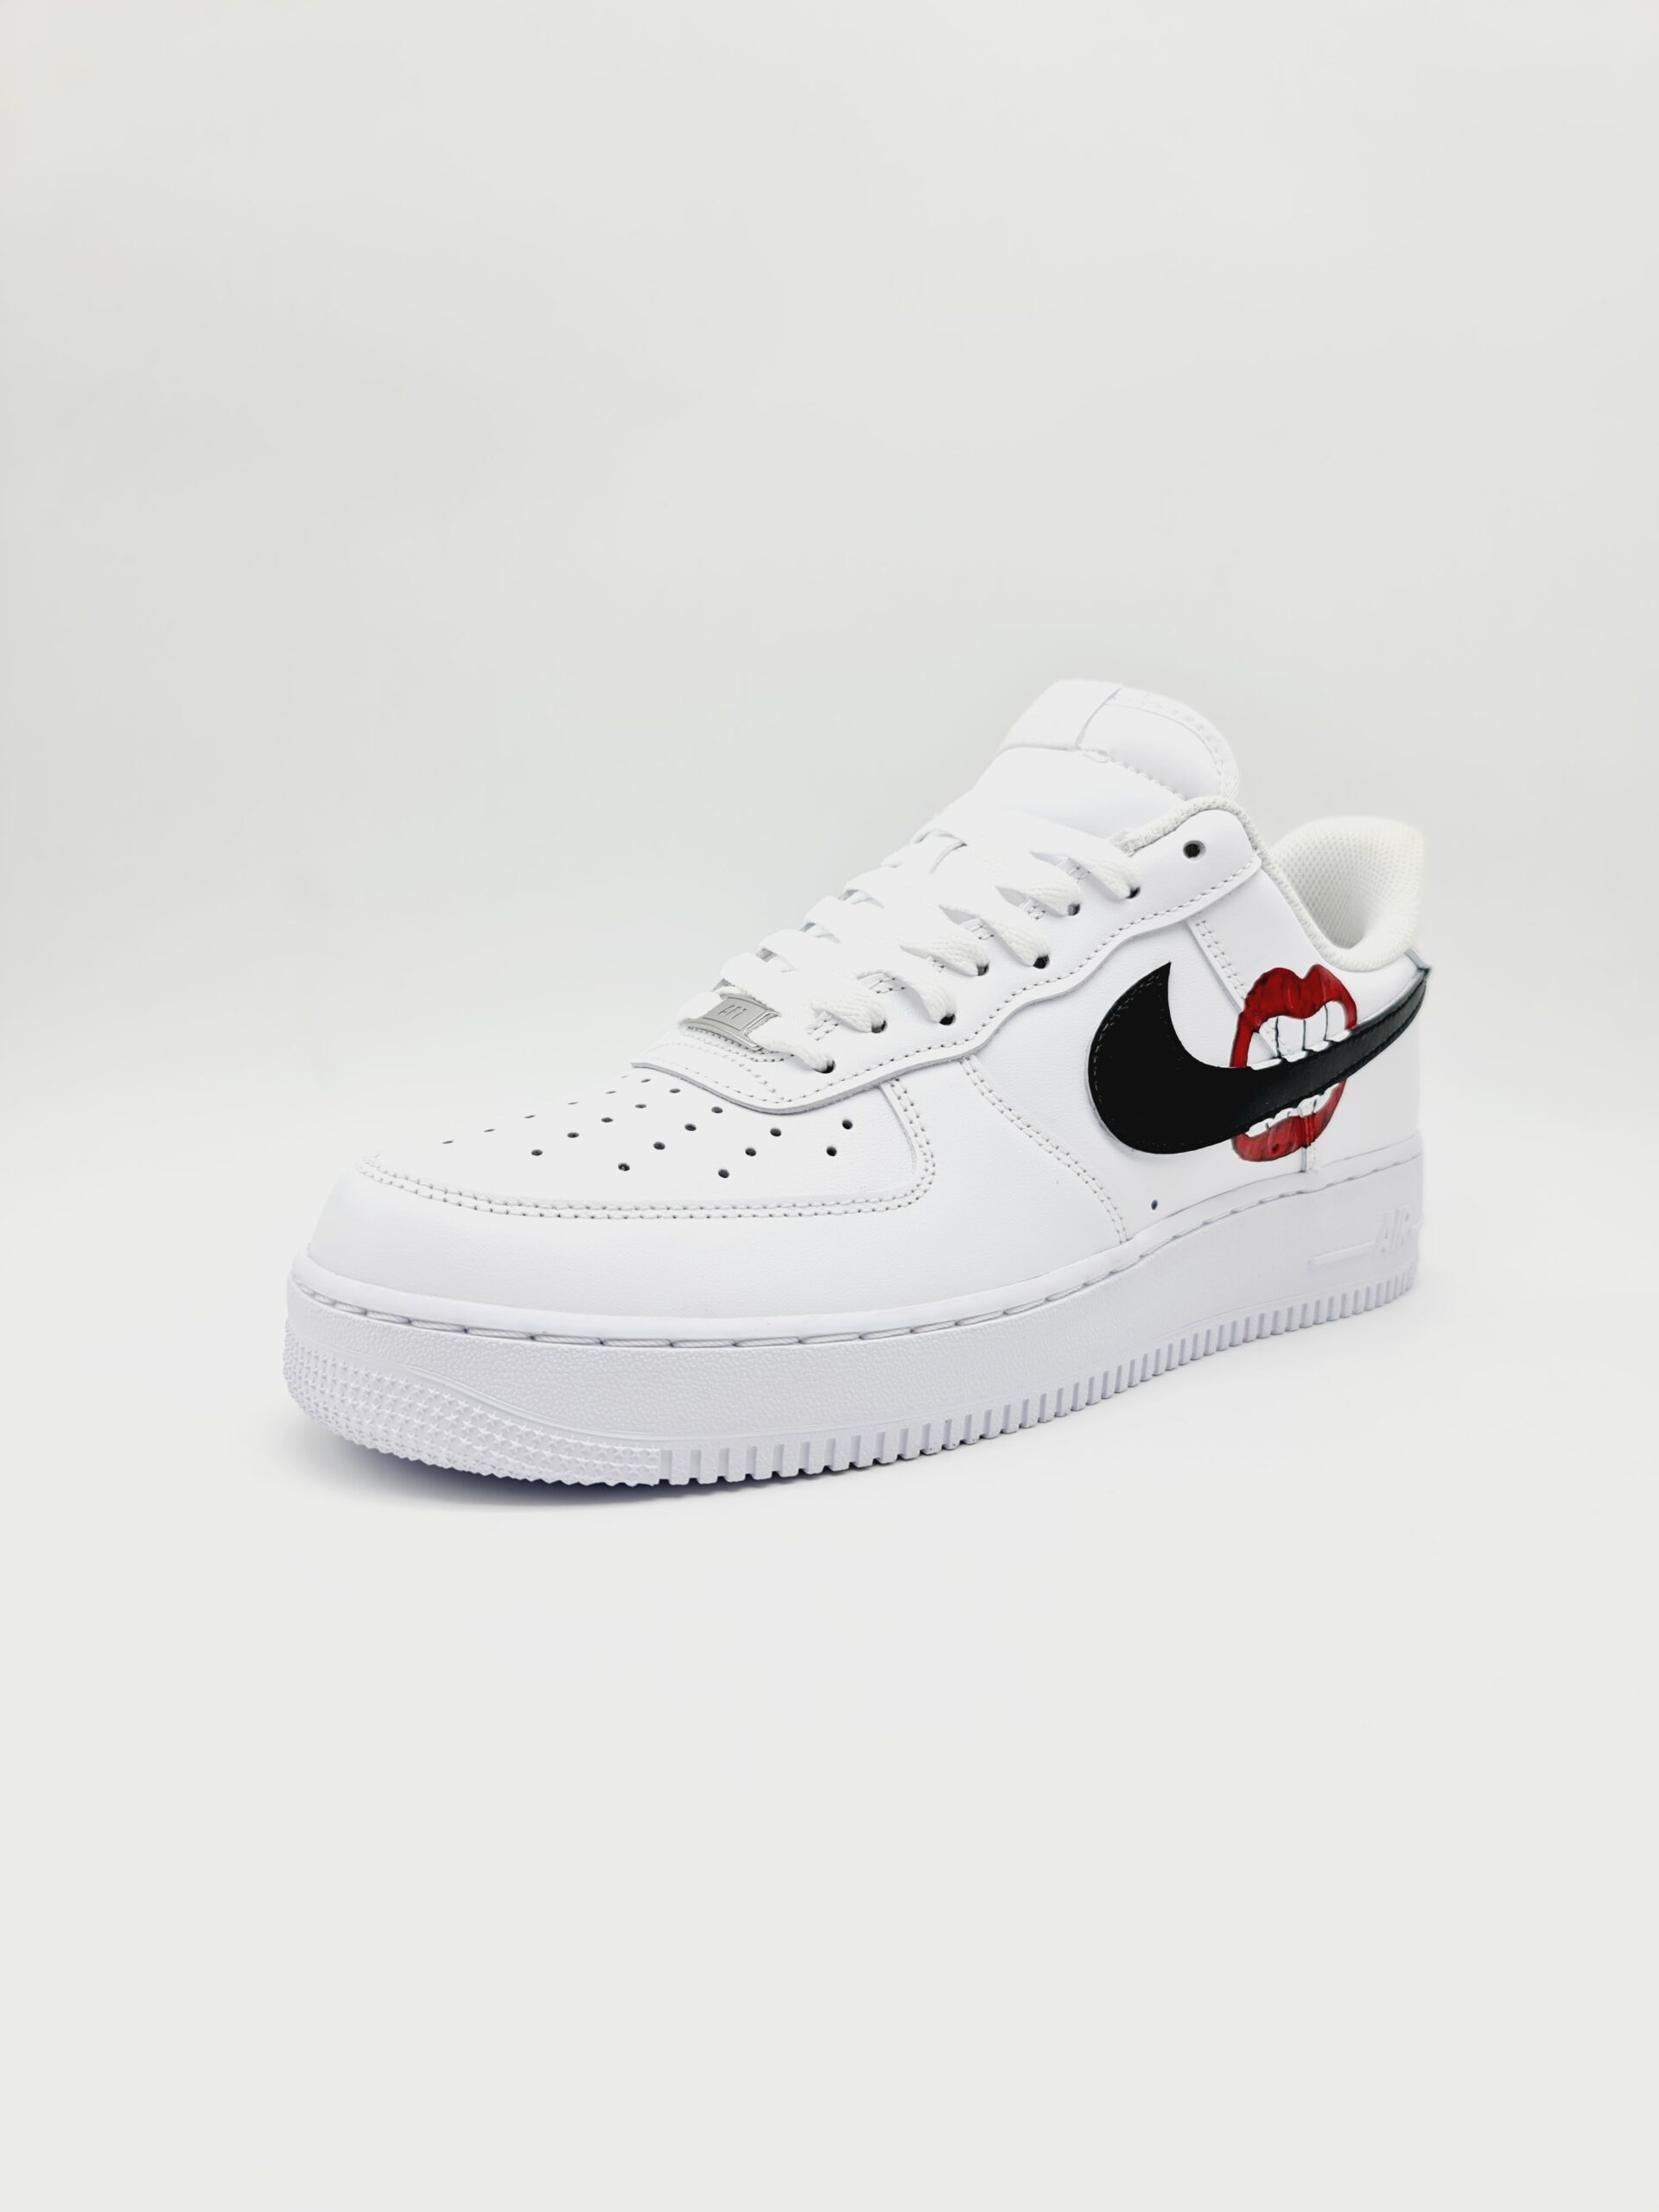 Onvermijdelijk Meyella schijf Nike Air Force 1 Mouth - Double G Customs - Custom Sneakers